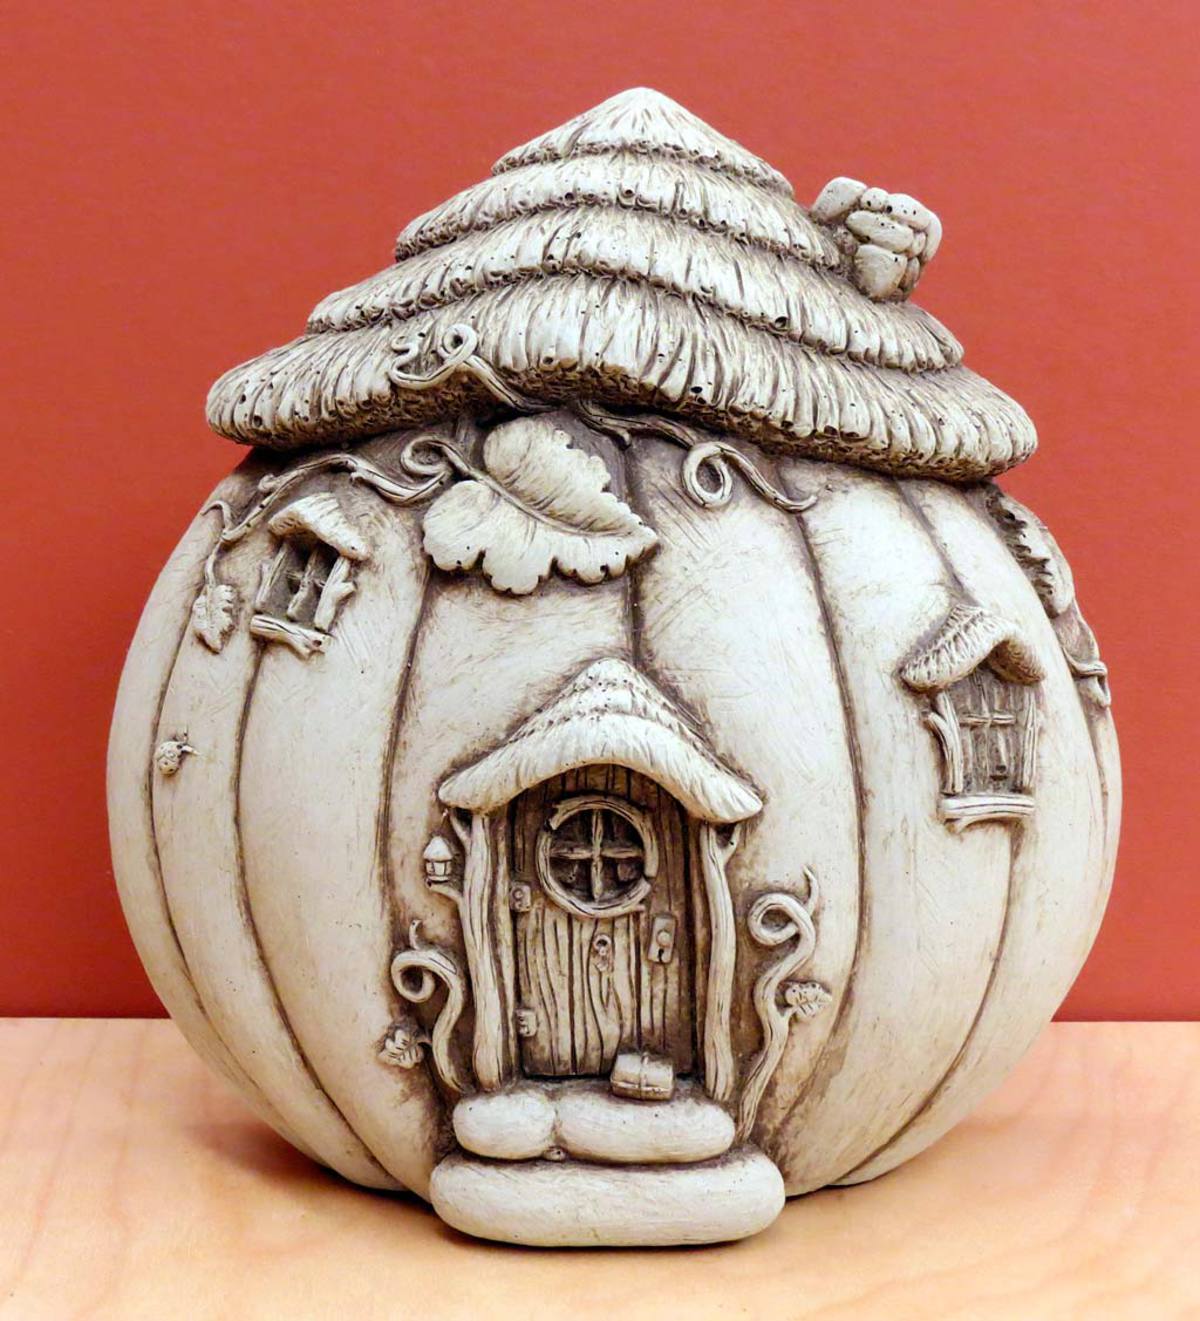 Cast Stone Fairy Home in a Pumpkin